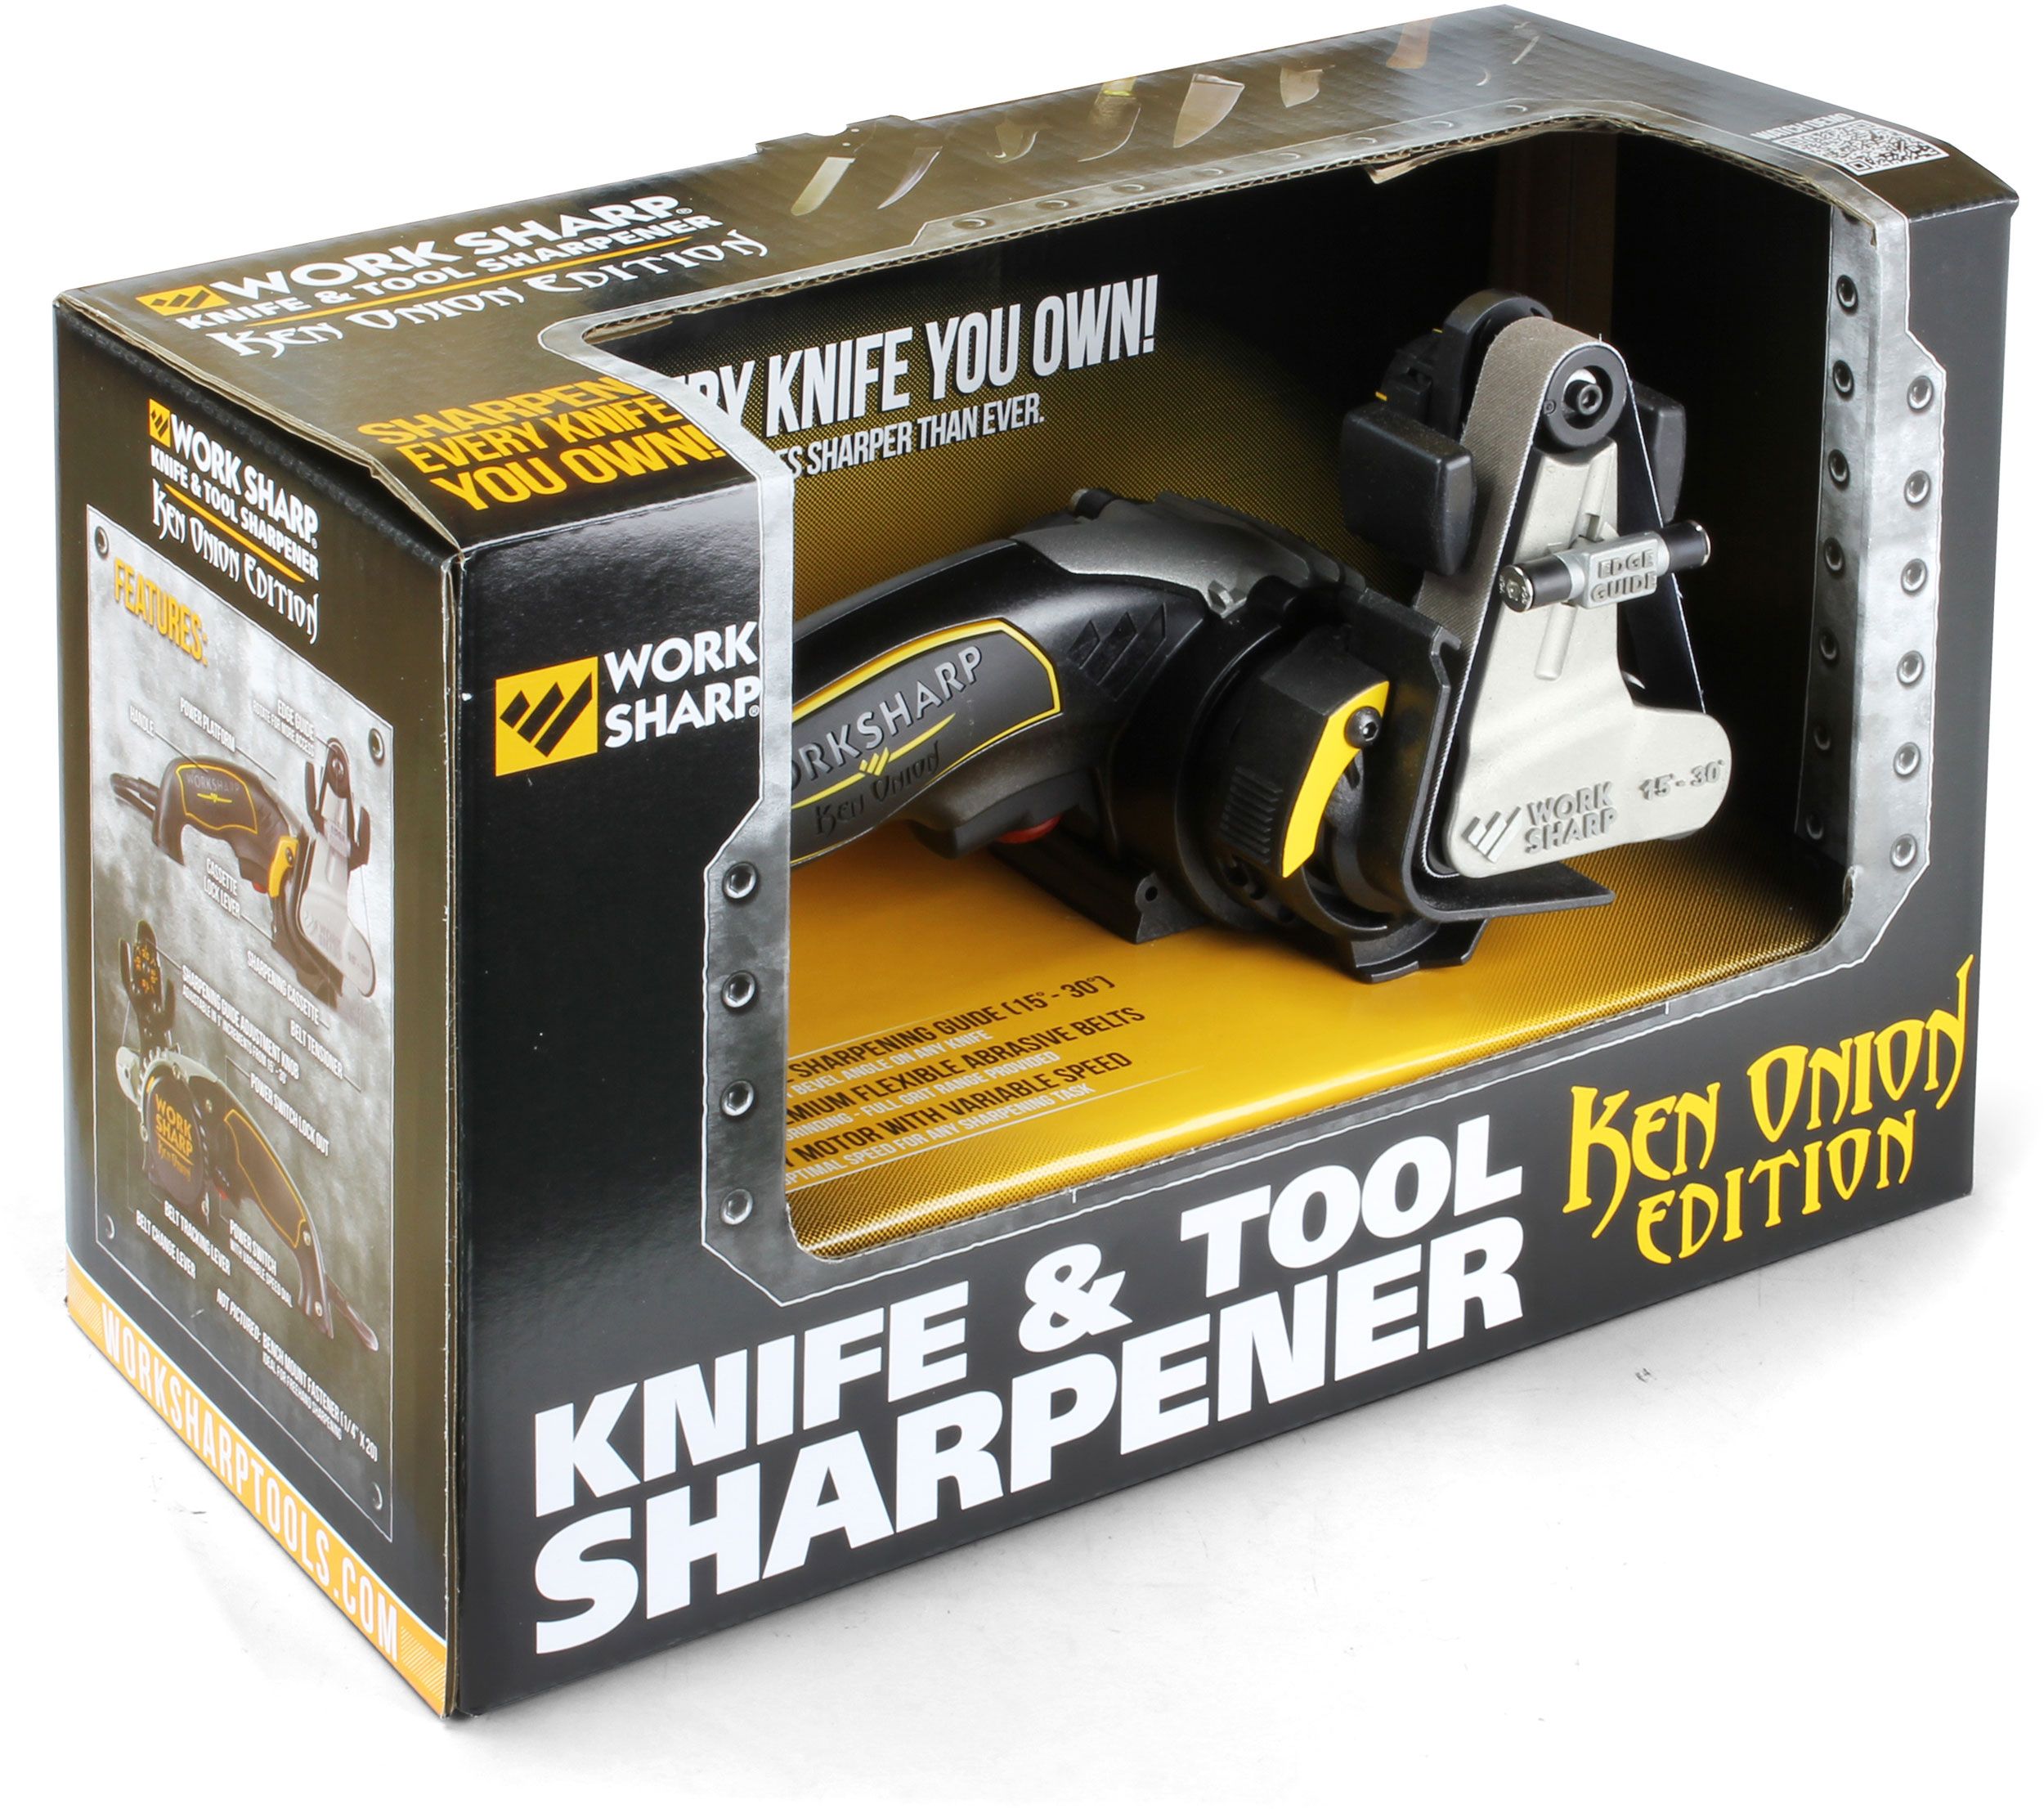 Work Sharp WSKTS-KO Ken Onion Edition Knife & Tool Sharpener - KnifeCenter